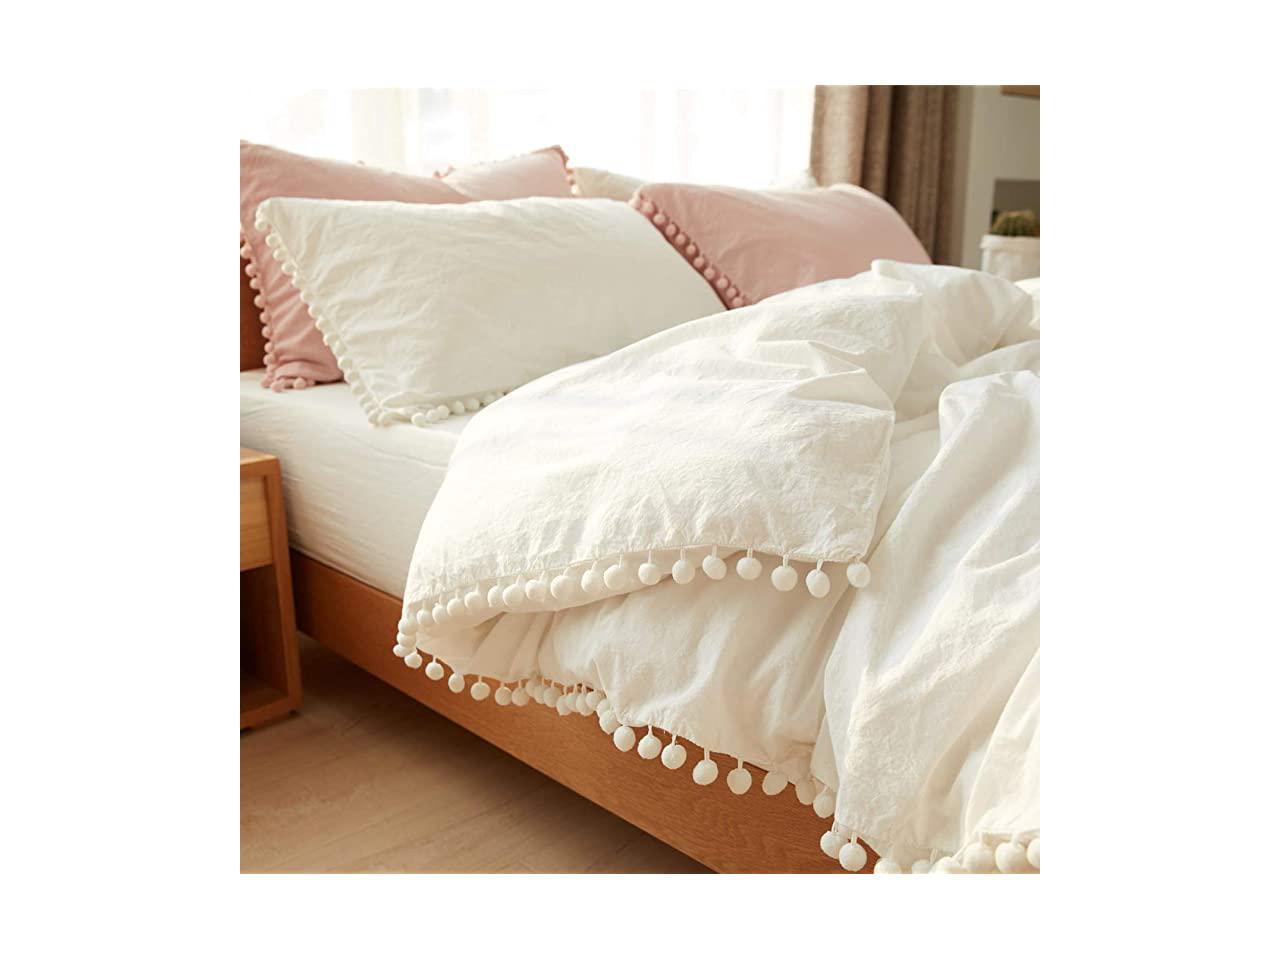 Set-3 Indian Cotton Luxury Premium Quality Bohemian Solid White Plain Doona Duvet Cover % Pom-Pom Throw Handmade Decorative 2 Pillow Cover